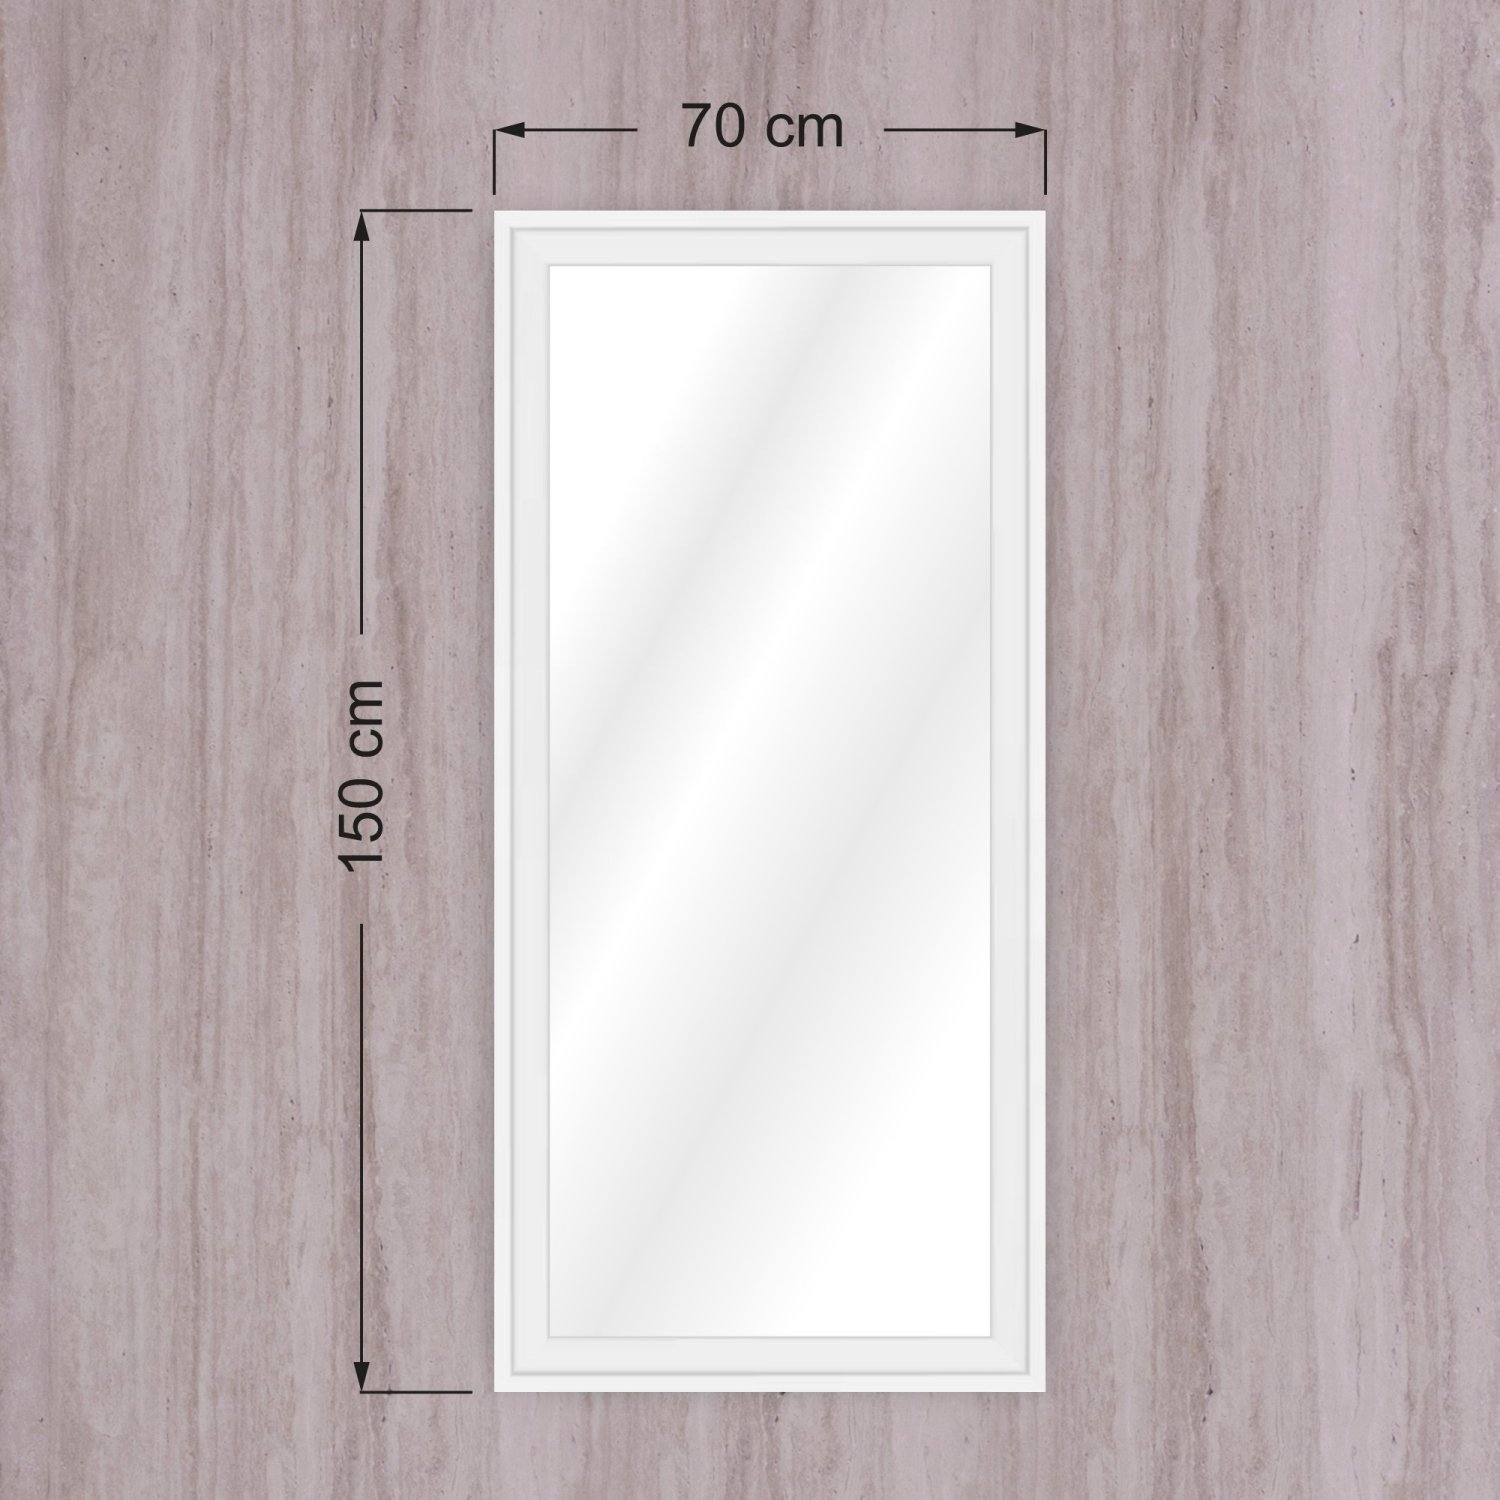 Espelho Elegant 150br 70cm X 150cm - 4